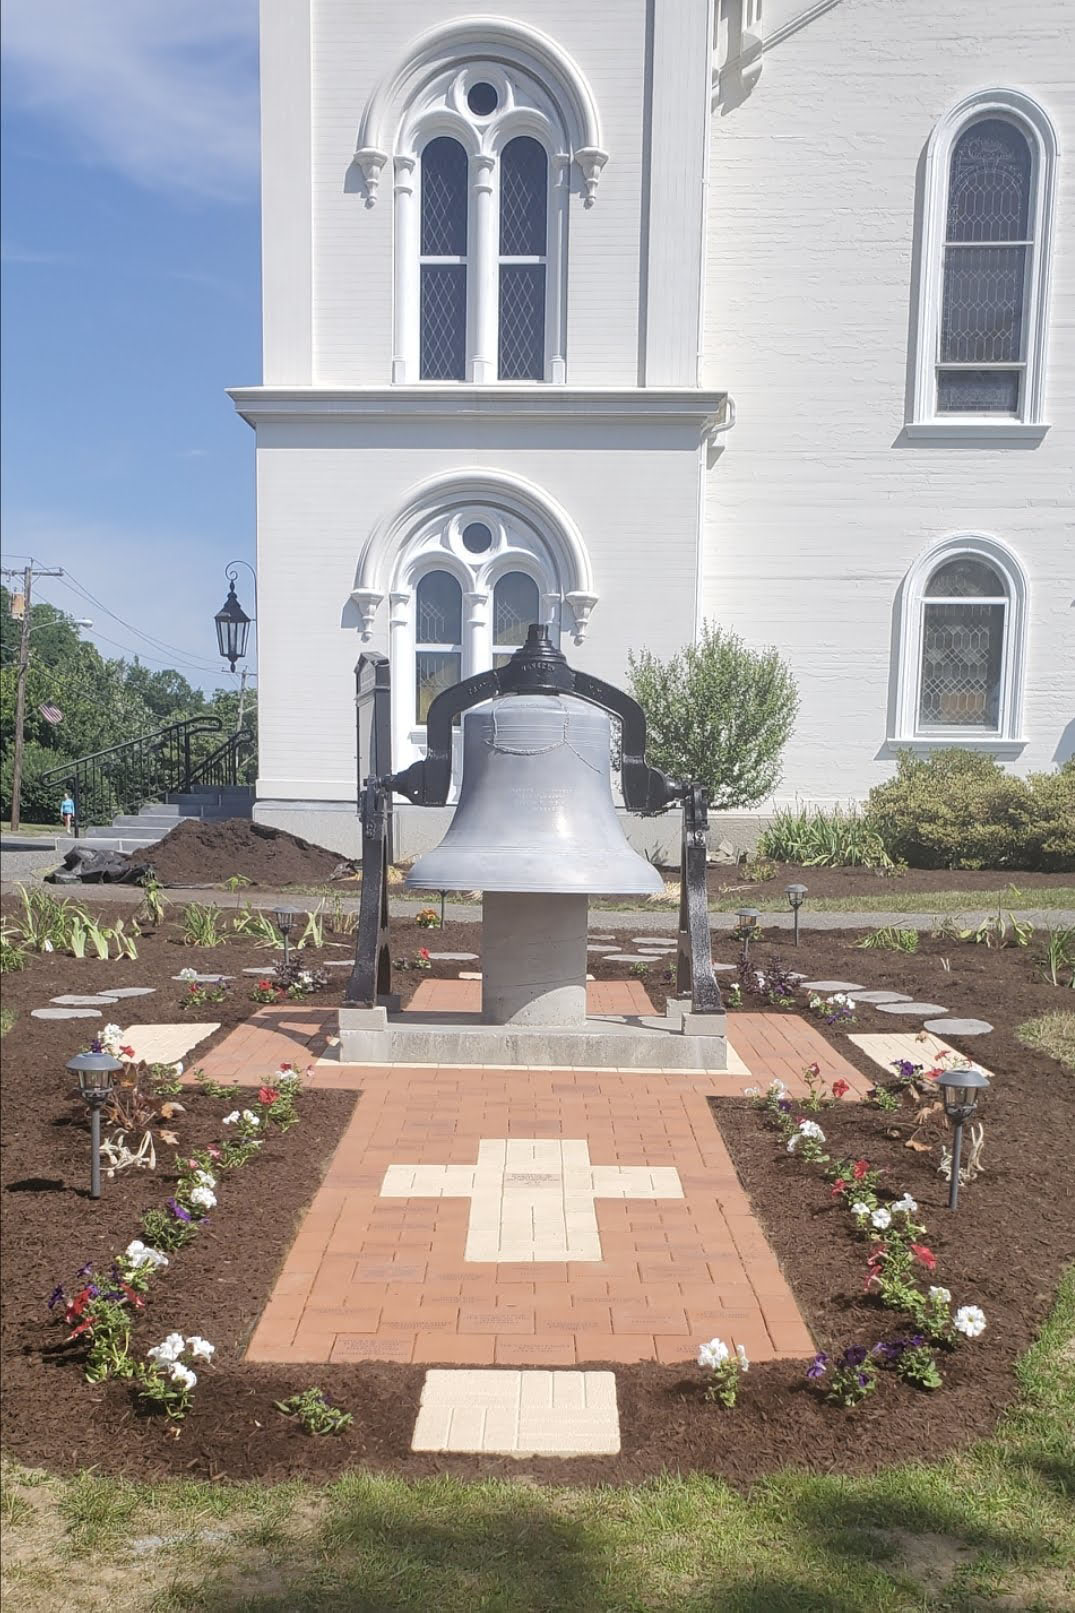 The First Church of Monson Memorial Garden